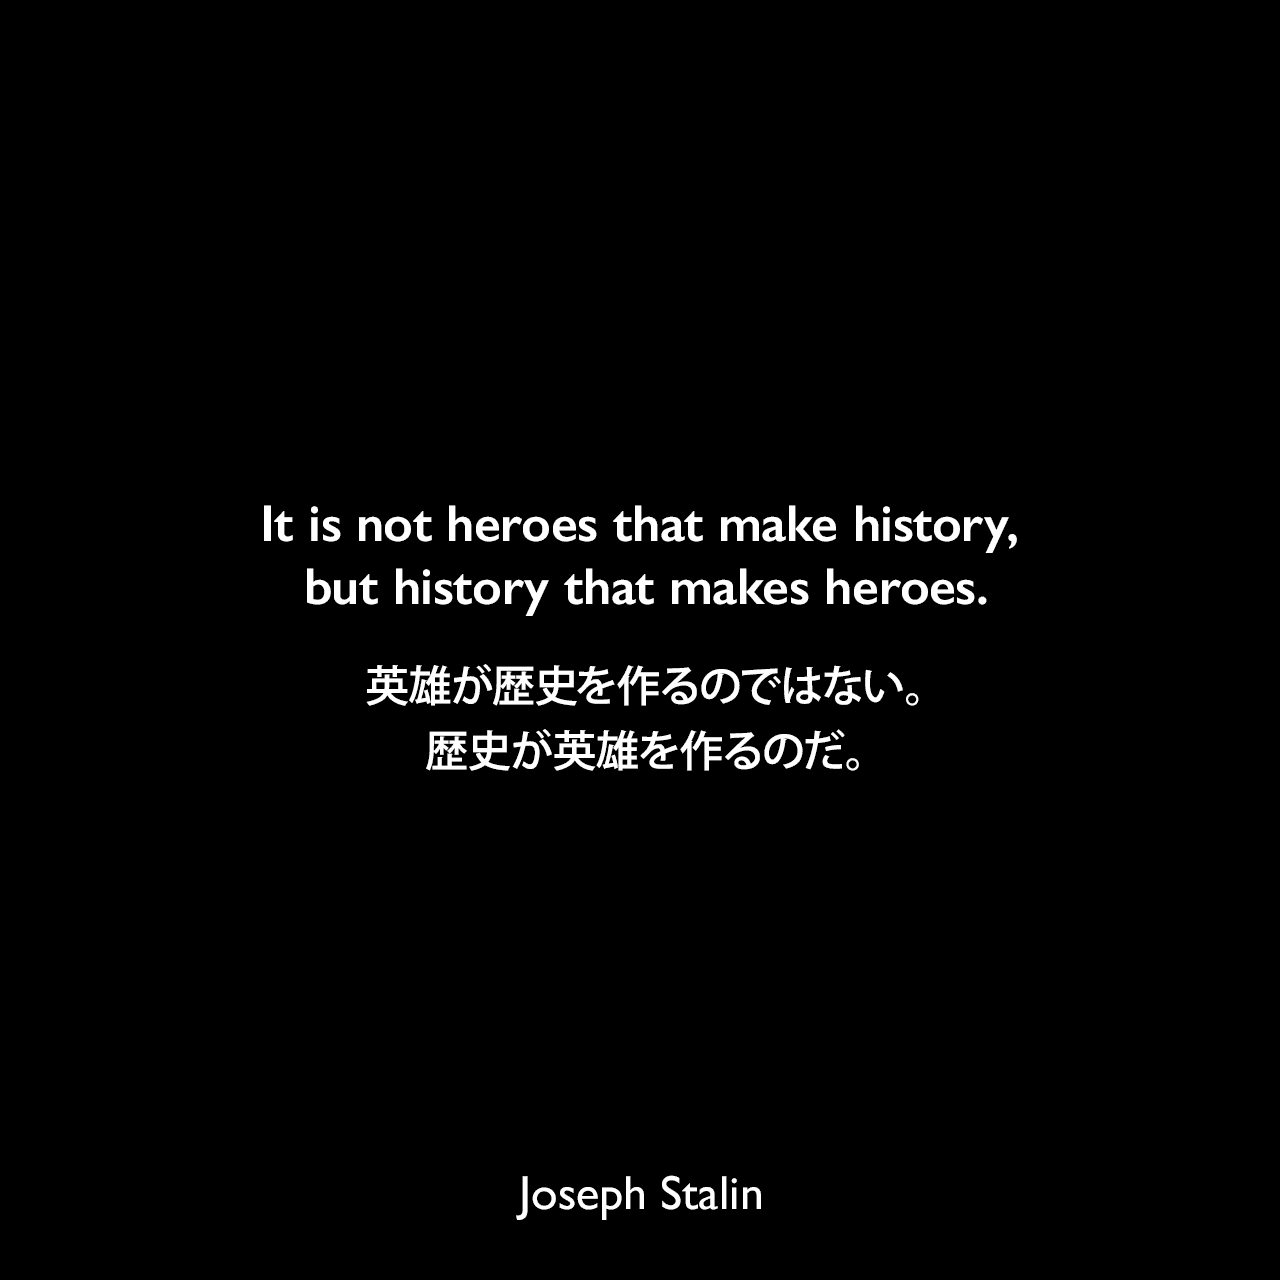 It is not heroes that make history, but history that makes heroes.英雄が歴史を作るのではない。歴史が英雄を作るのだ。Joseph Stalin